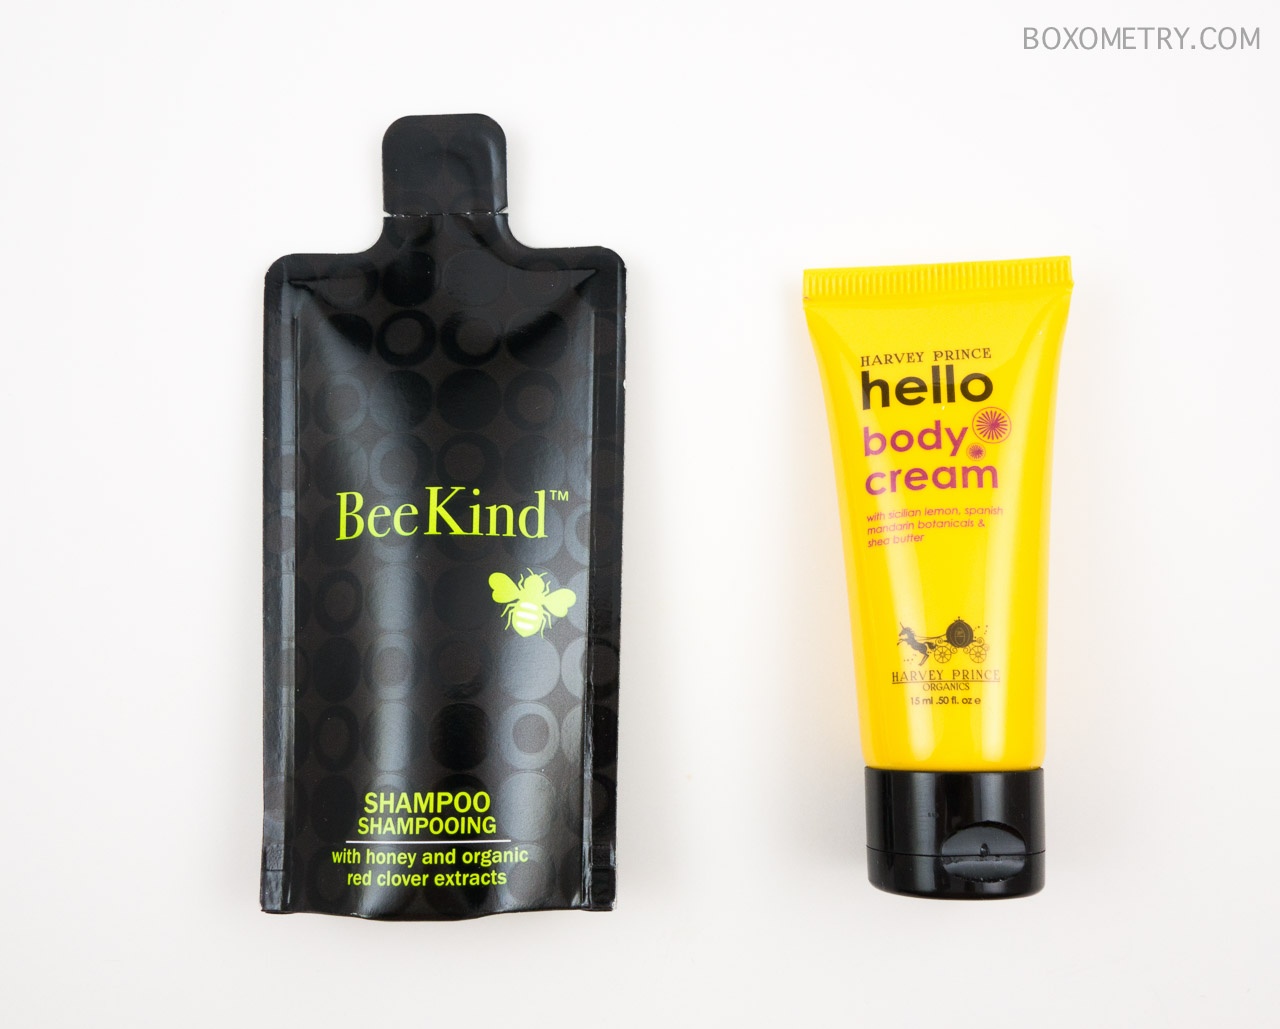 Birchbox February 2015 BeeKind Shampoo and Harvey Prince Body Cream